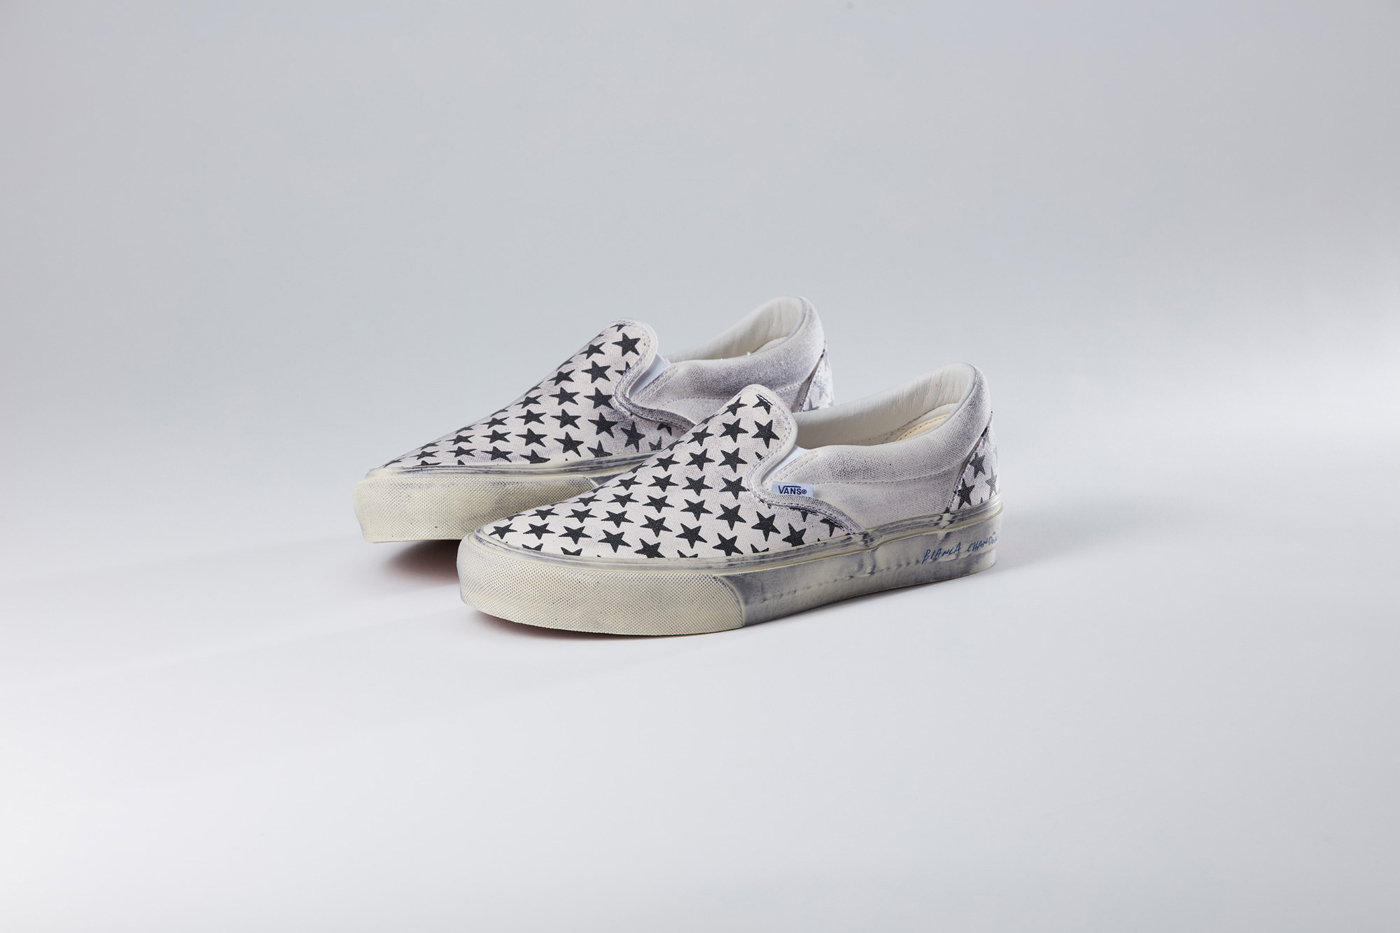 bianca-chandon-vans-shoes-price-collab (14)